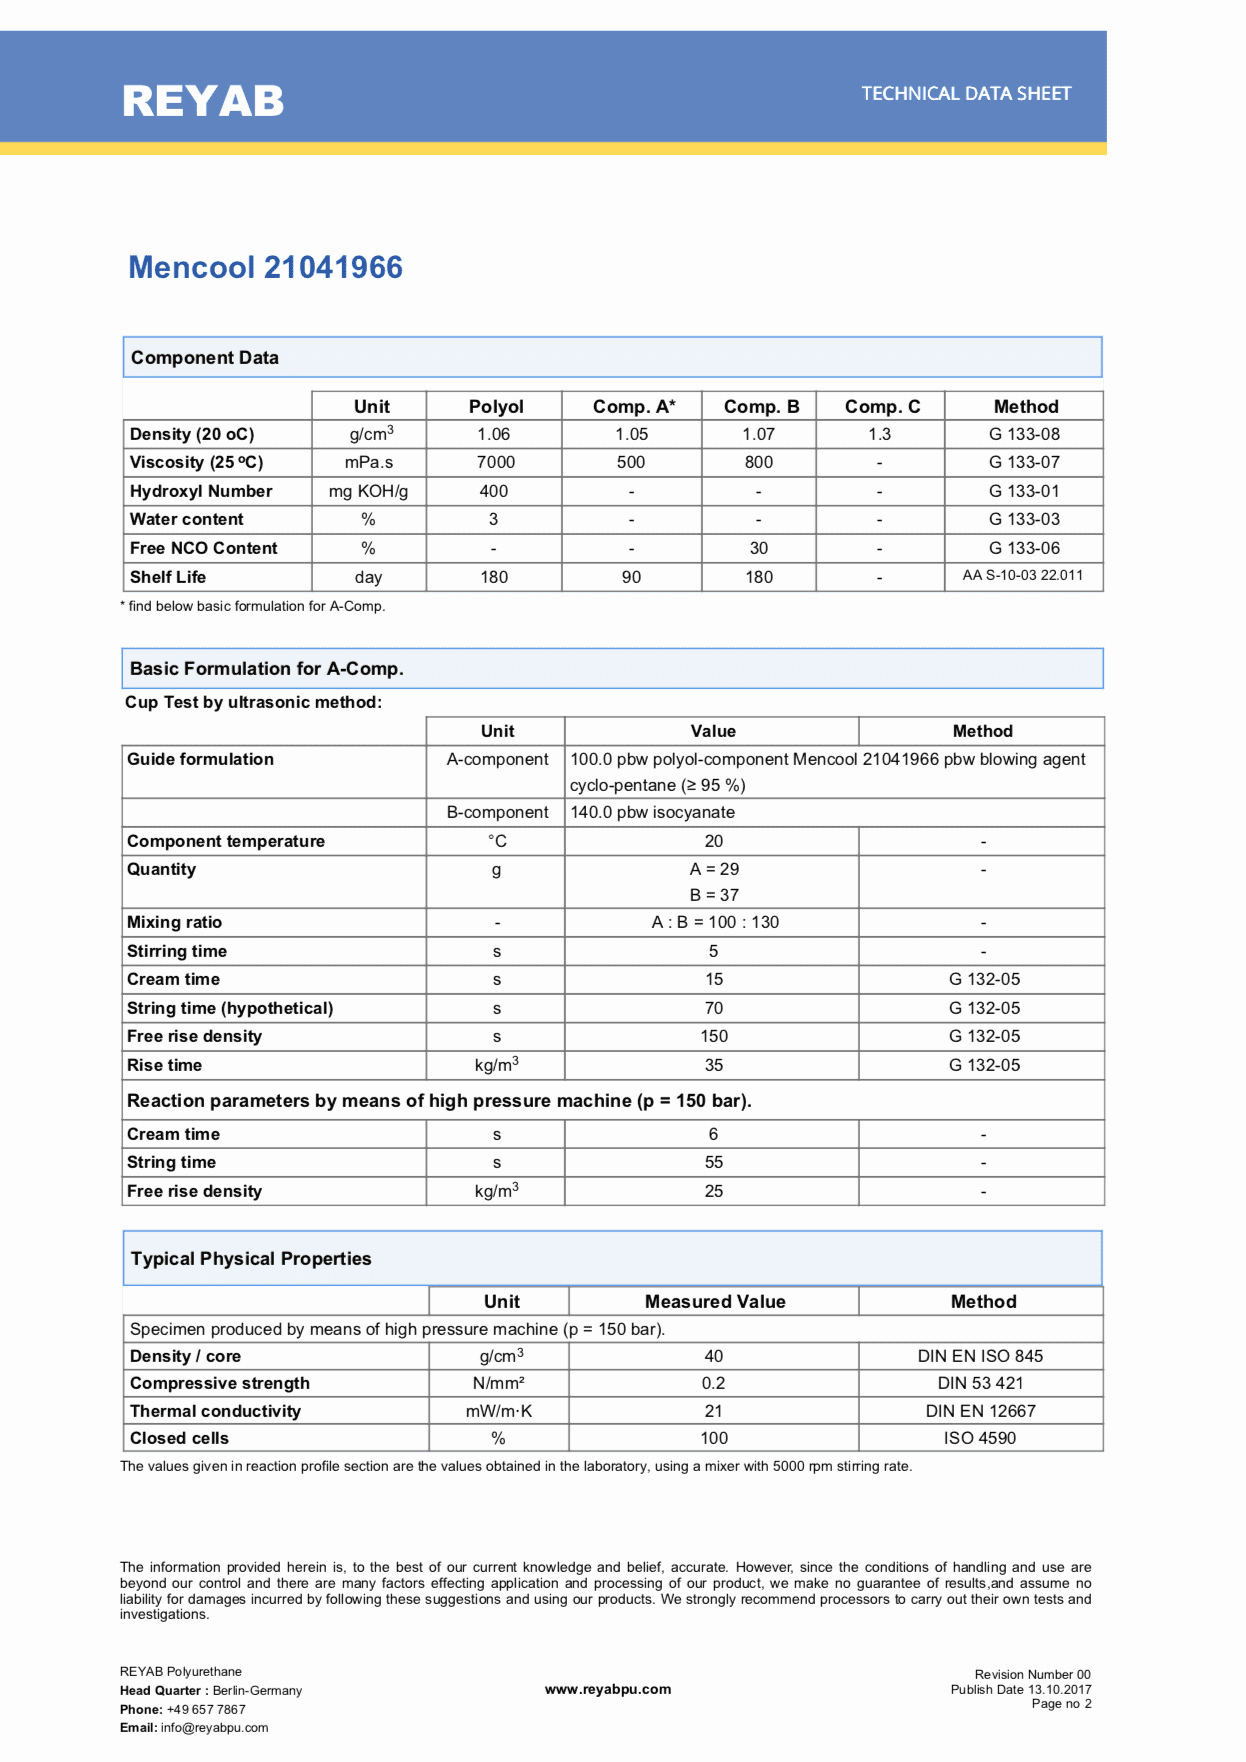 Product Data Sheet Template Inspirational Free Technical Data Sheet Templates for Polyurethane Foam